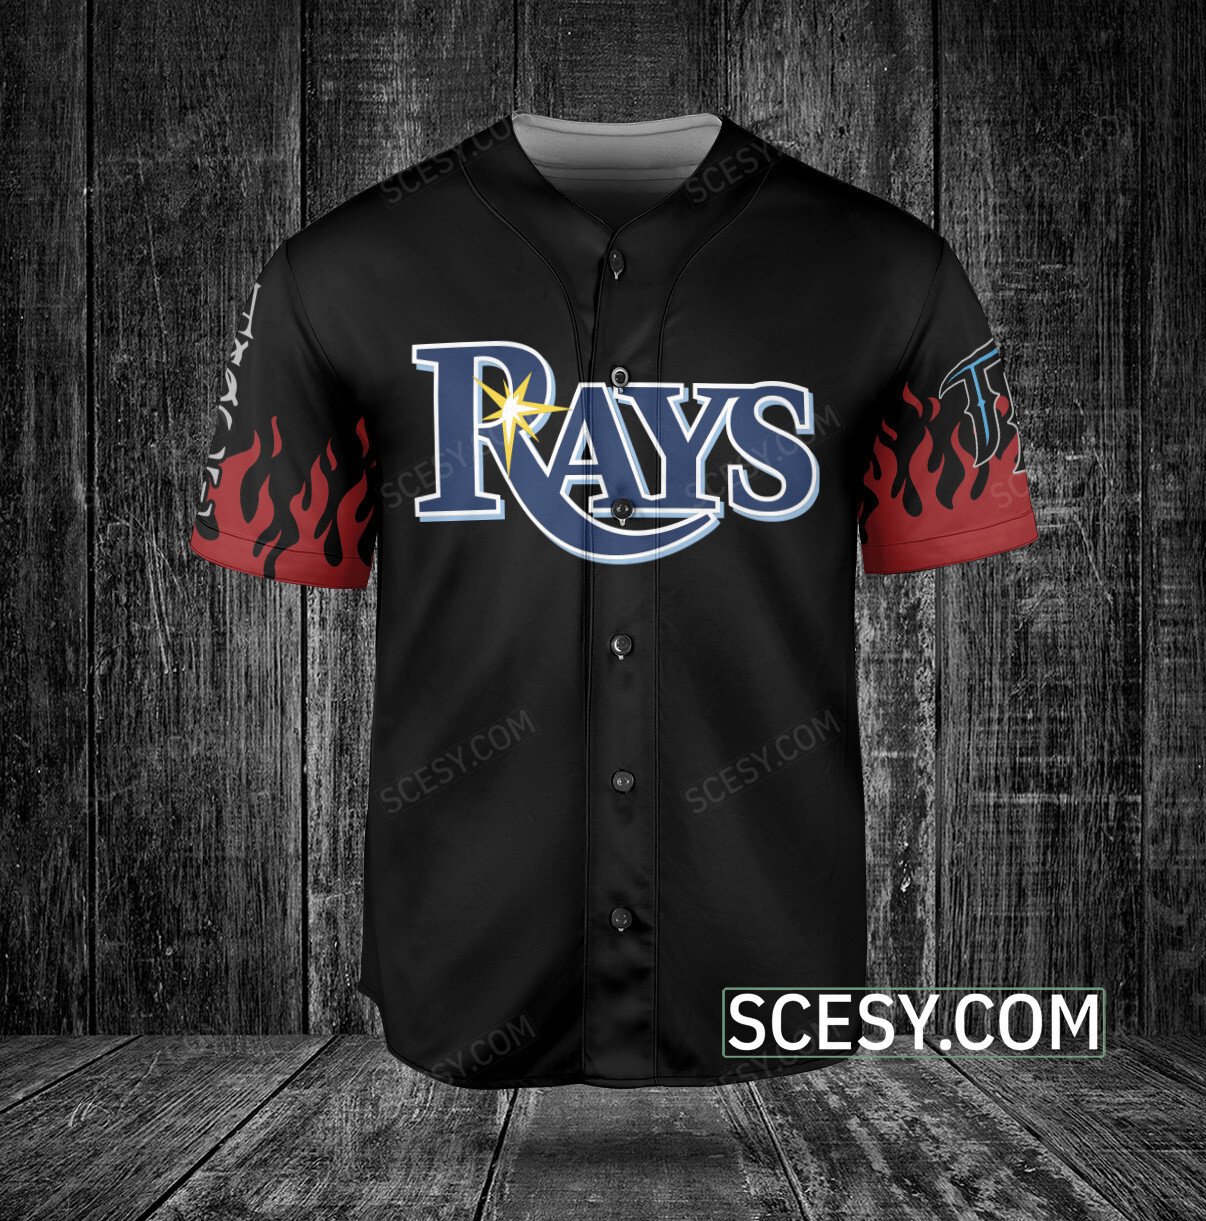 black tampa bay rays jersey